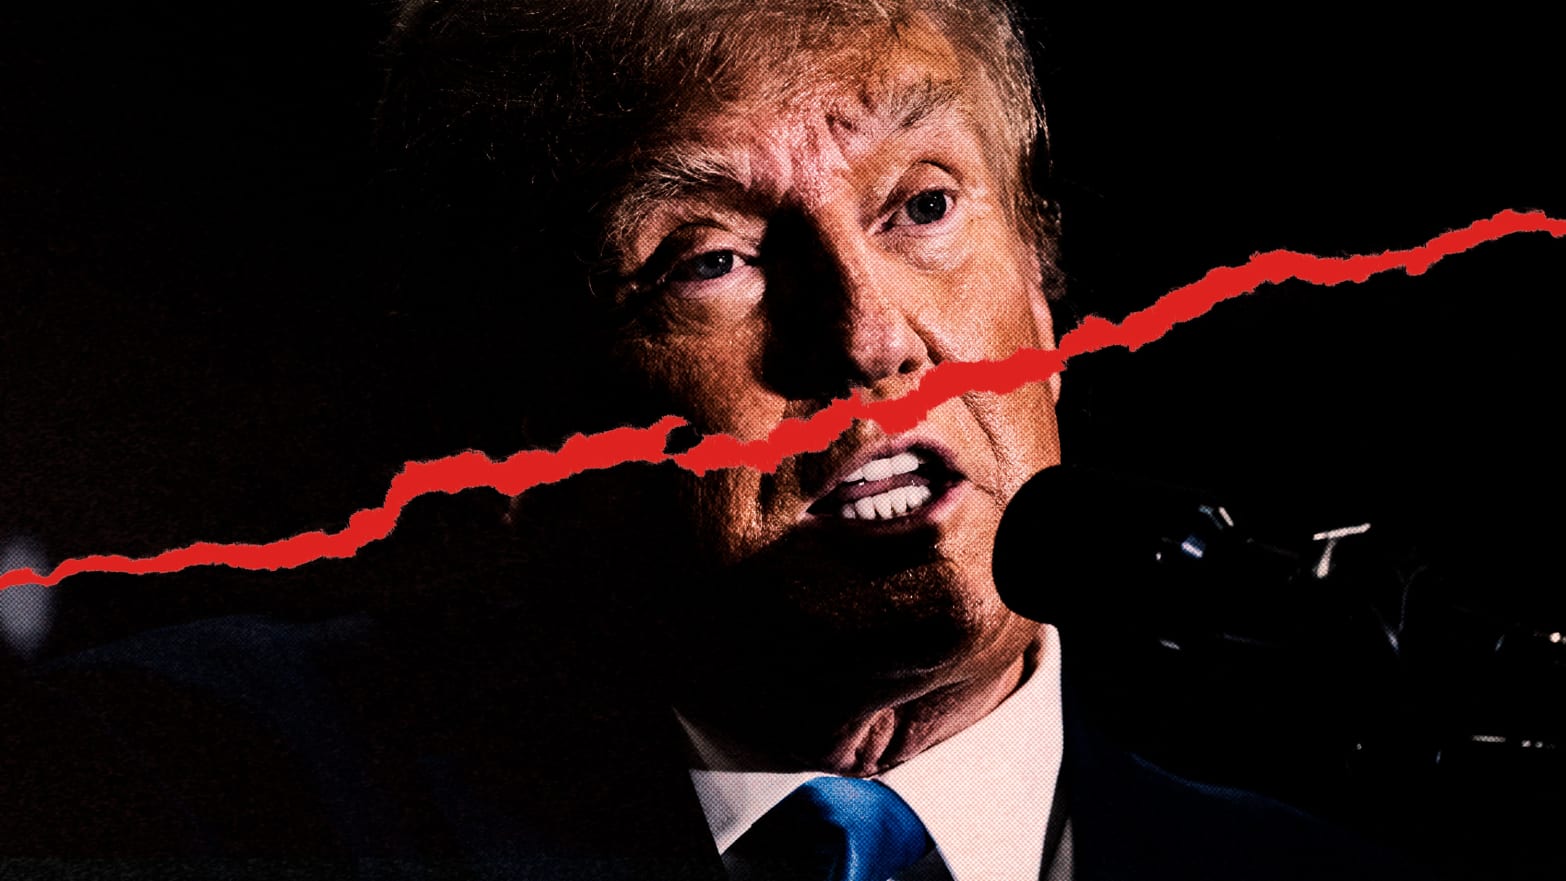 A photo illustration showing Donald Trump.